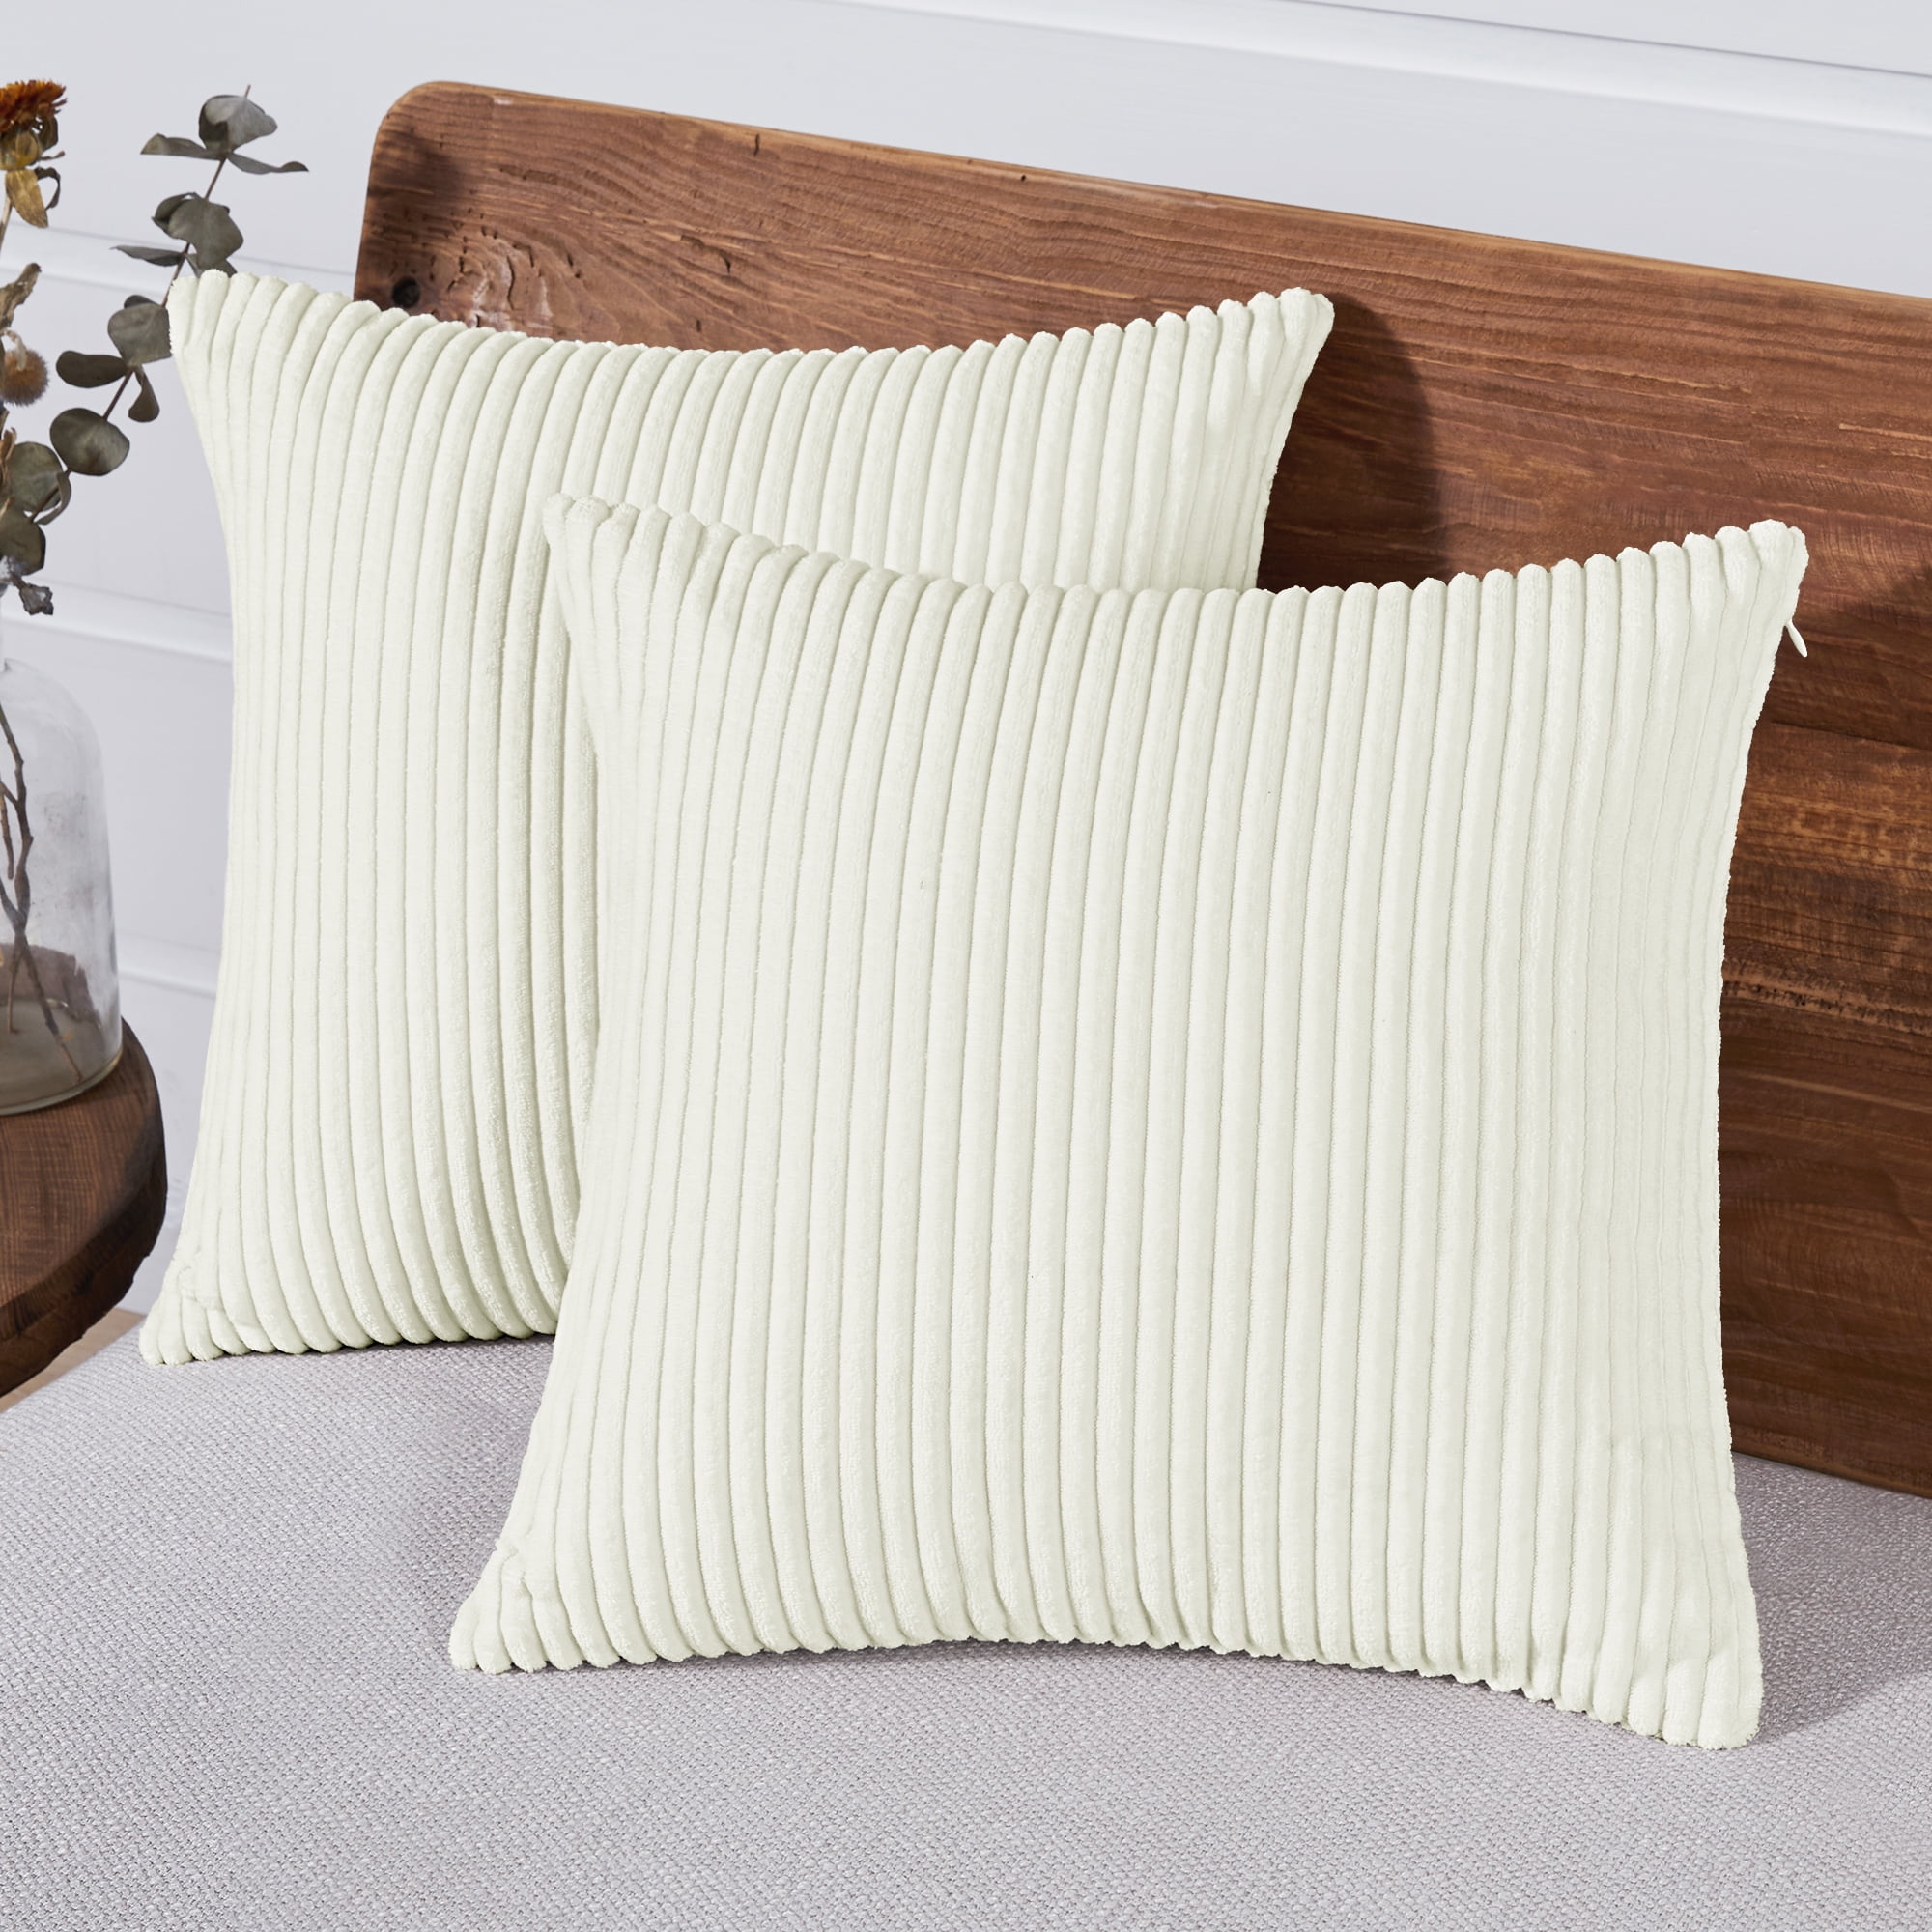 Artificial Coral cushion cover throw pillows case covers sofa car Bed Decorative 